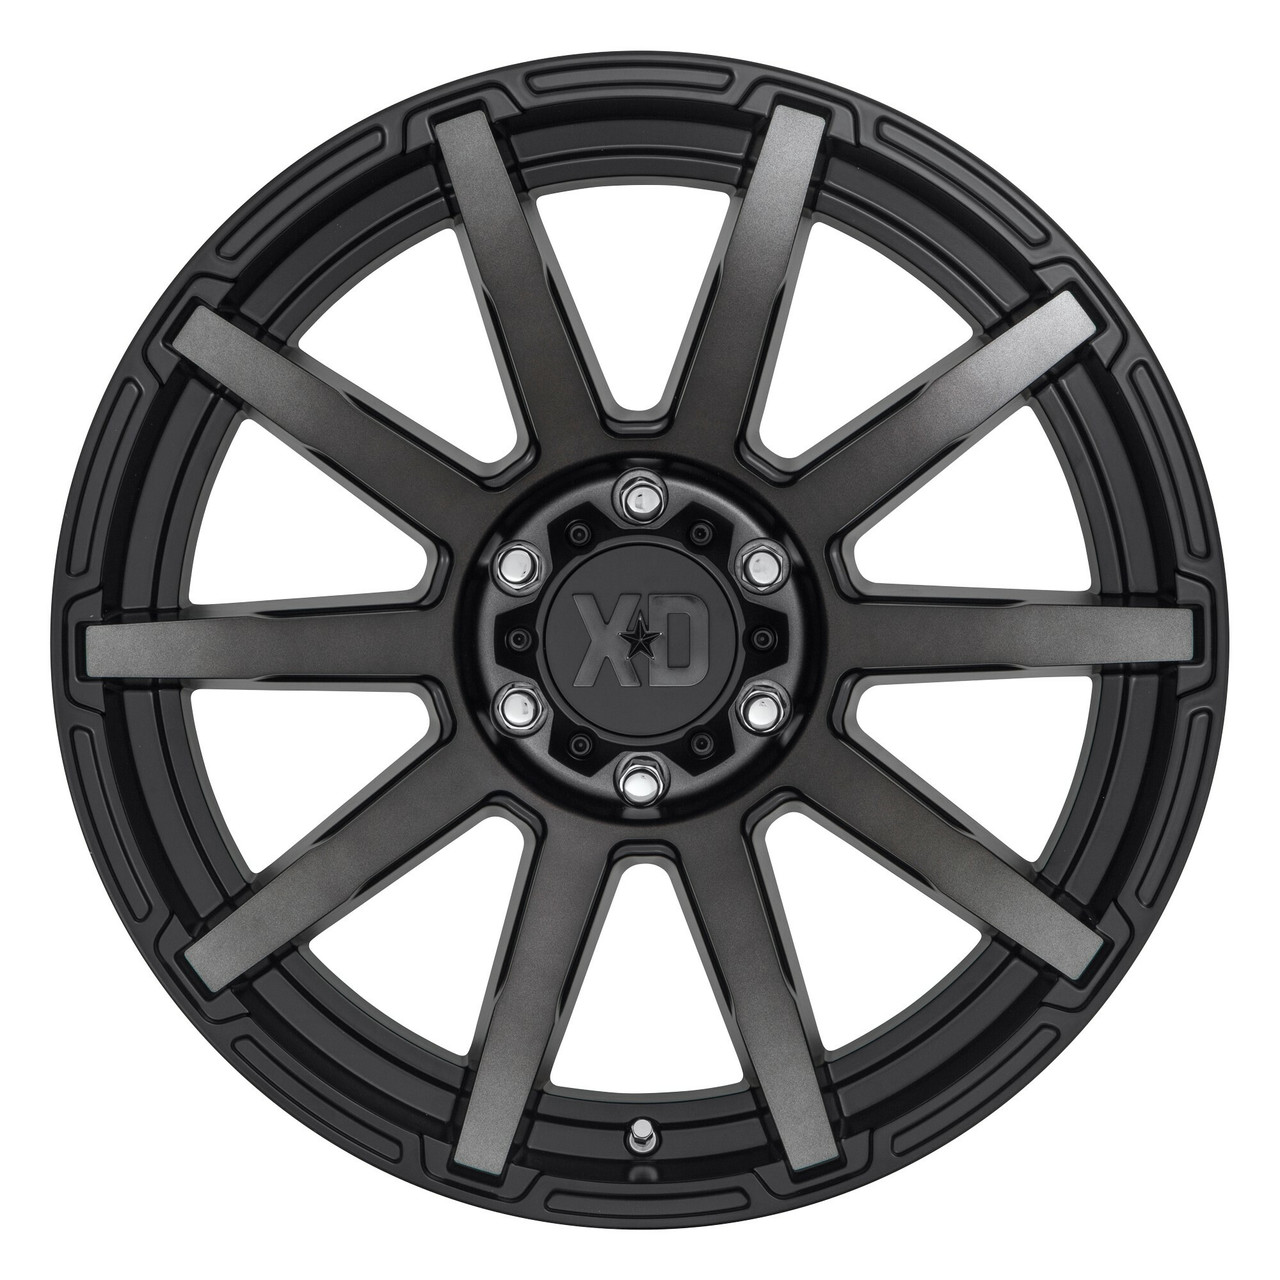 XD XD847 Outbreak 20x9 5x120 Satin Black With Gray Tint Wheel 20" 30mm Rim